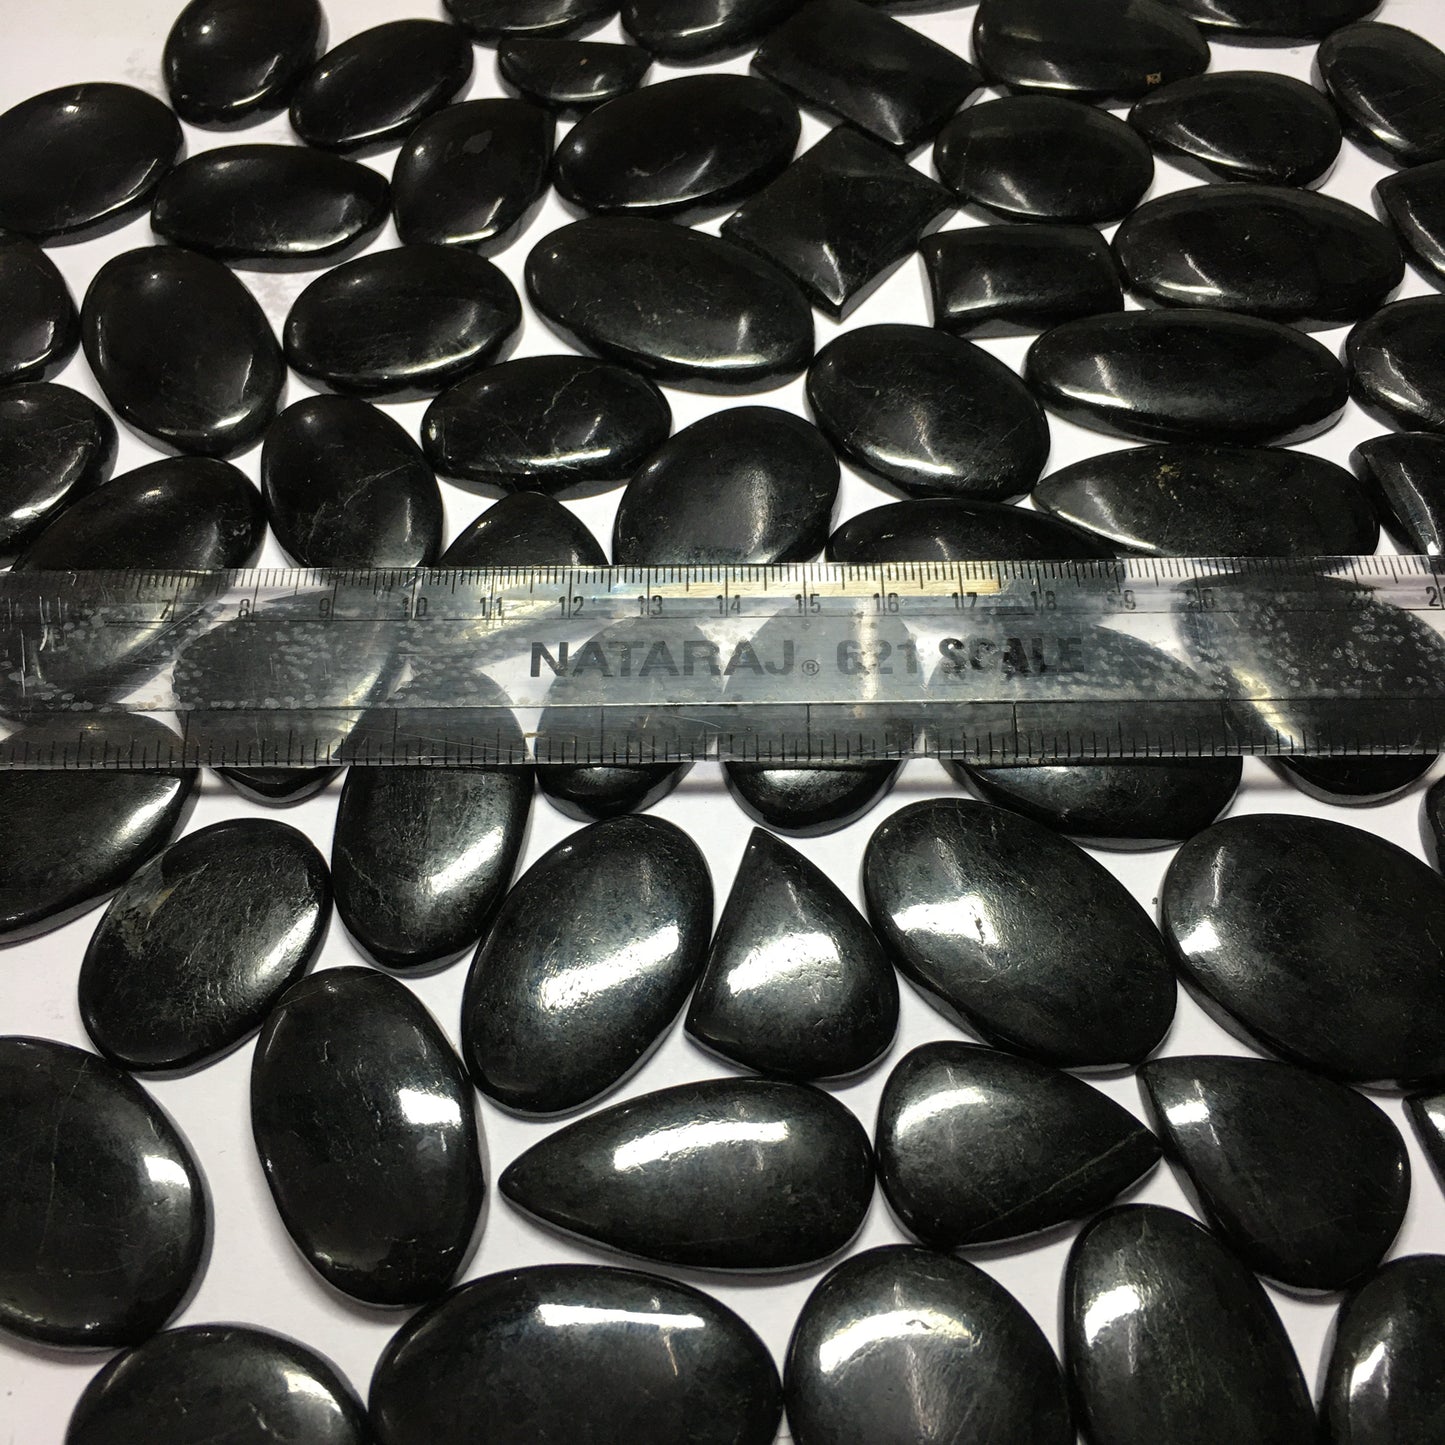 Natural Black Tourmaline Cabochon Loose Gemstone